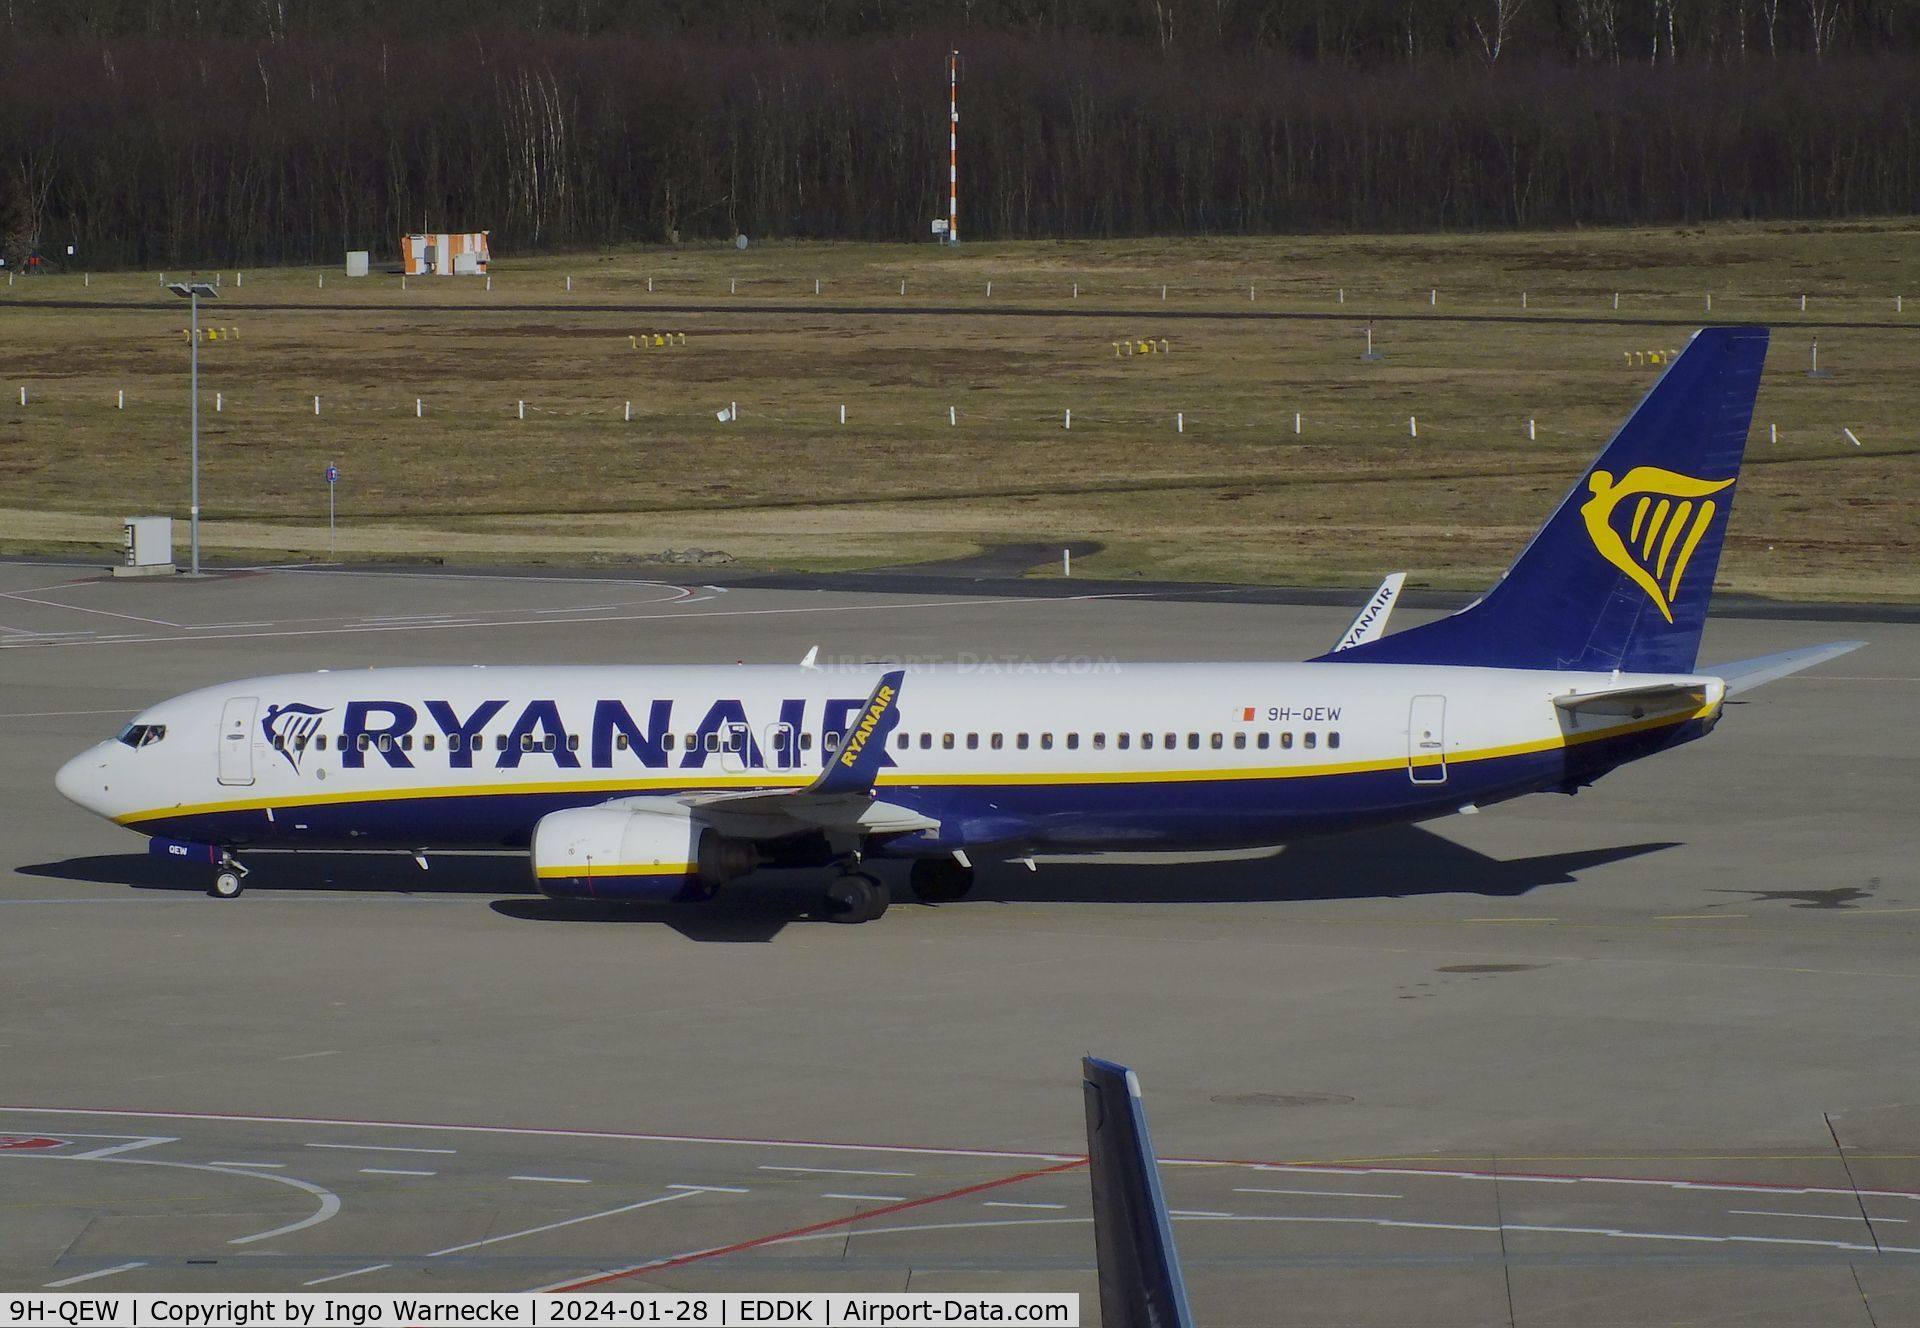 9H-QEW, , Boeing 737-8AS of Ryanair at Köln/Bonn (Cologne / Bonn) airport